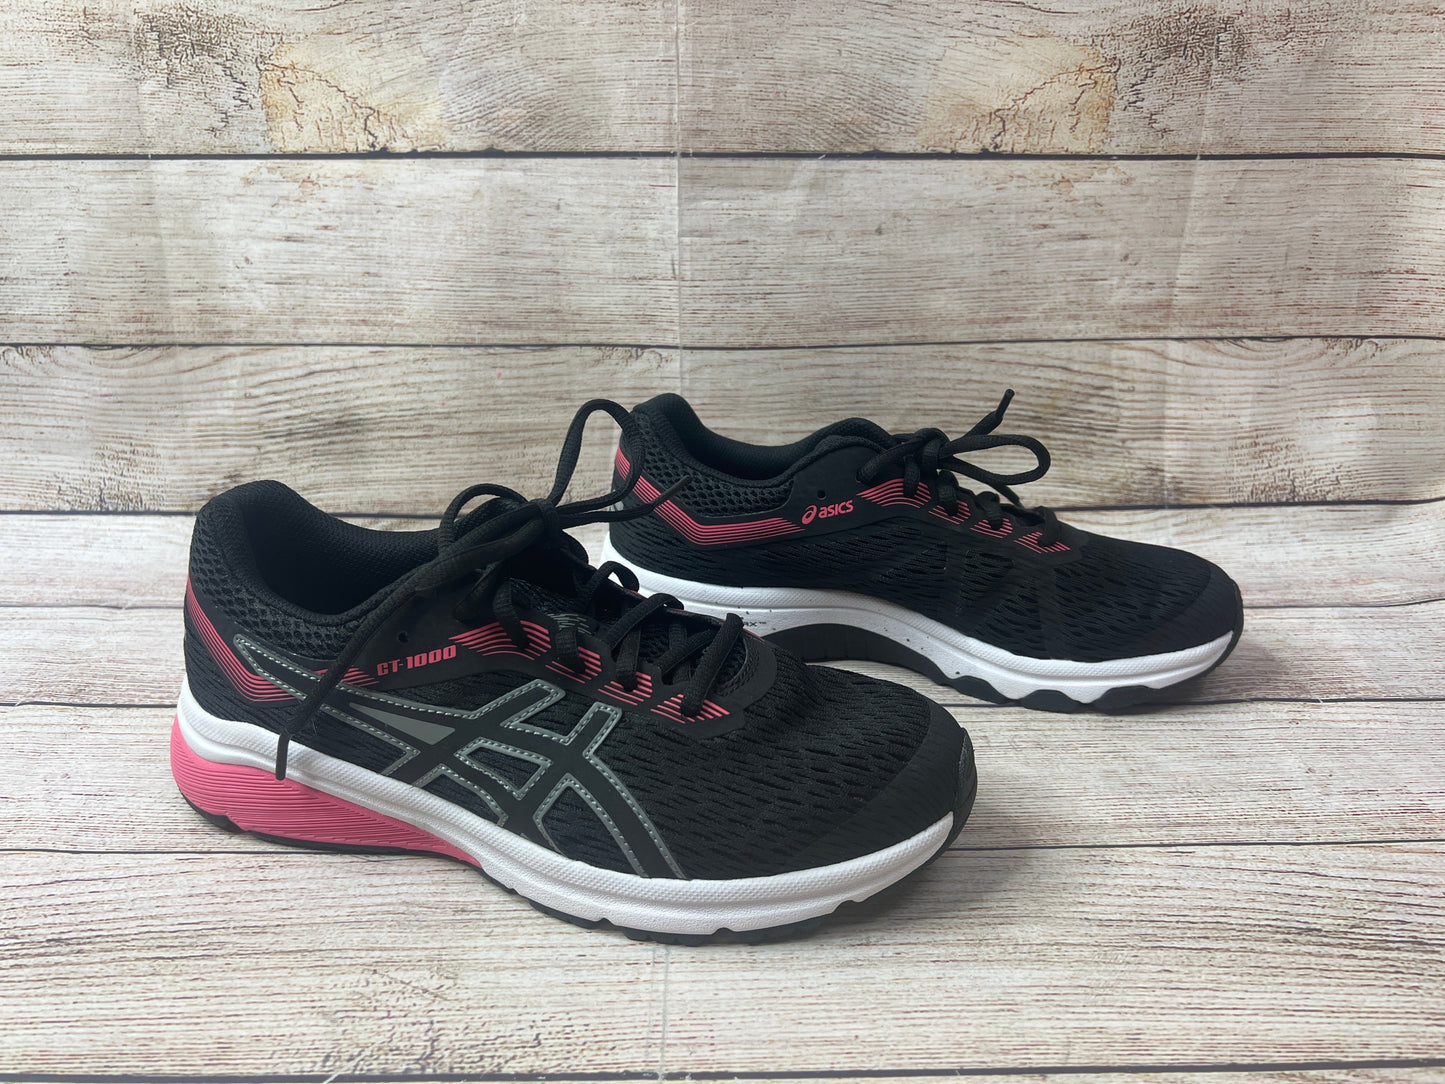 Black & Pink Shoes Athletic Asics, Size 6